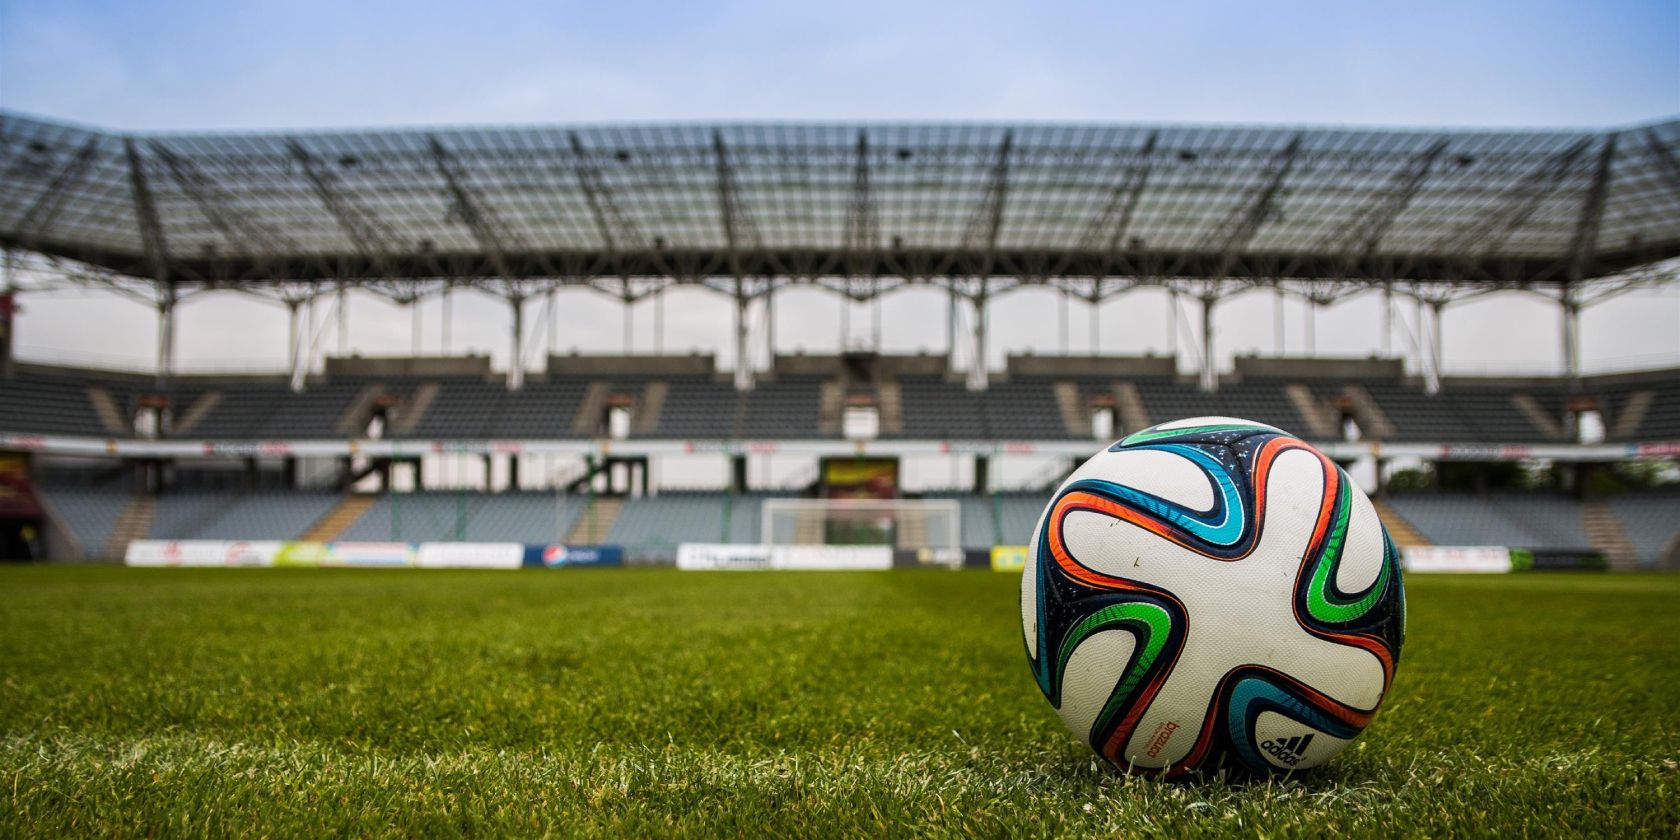 A soccer ball on the grass field of a stadium